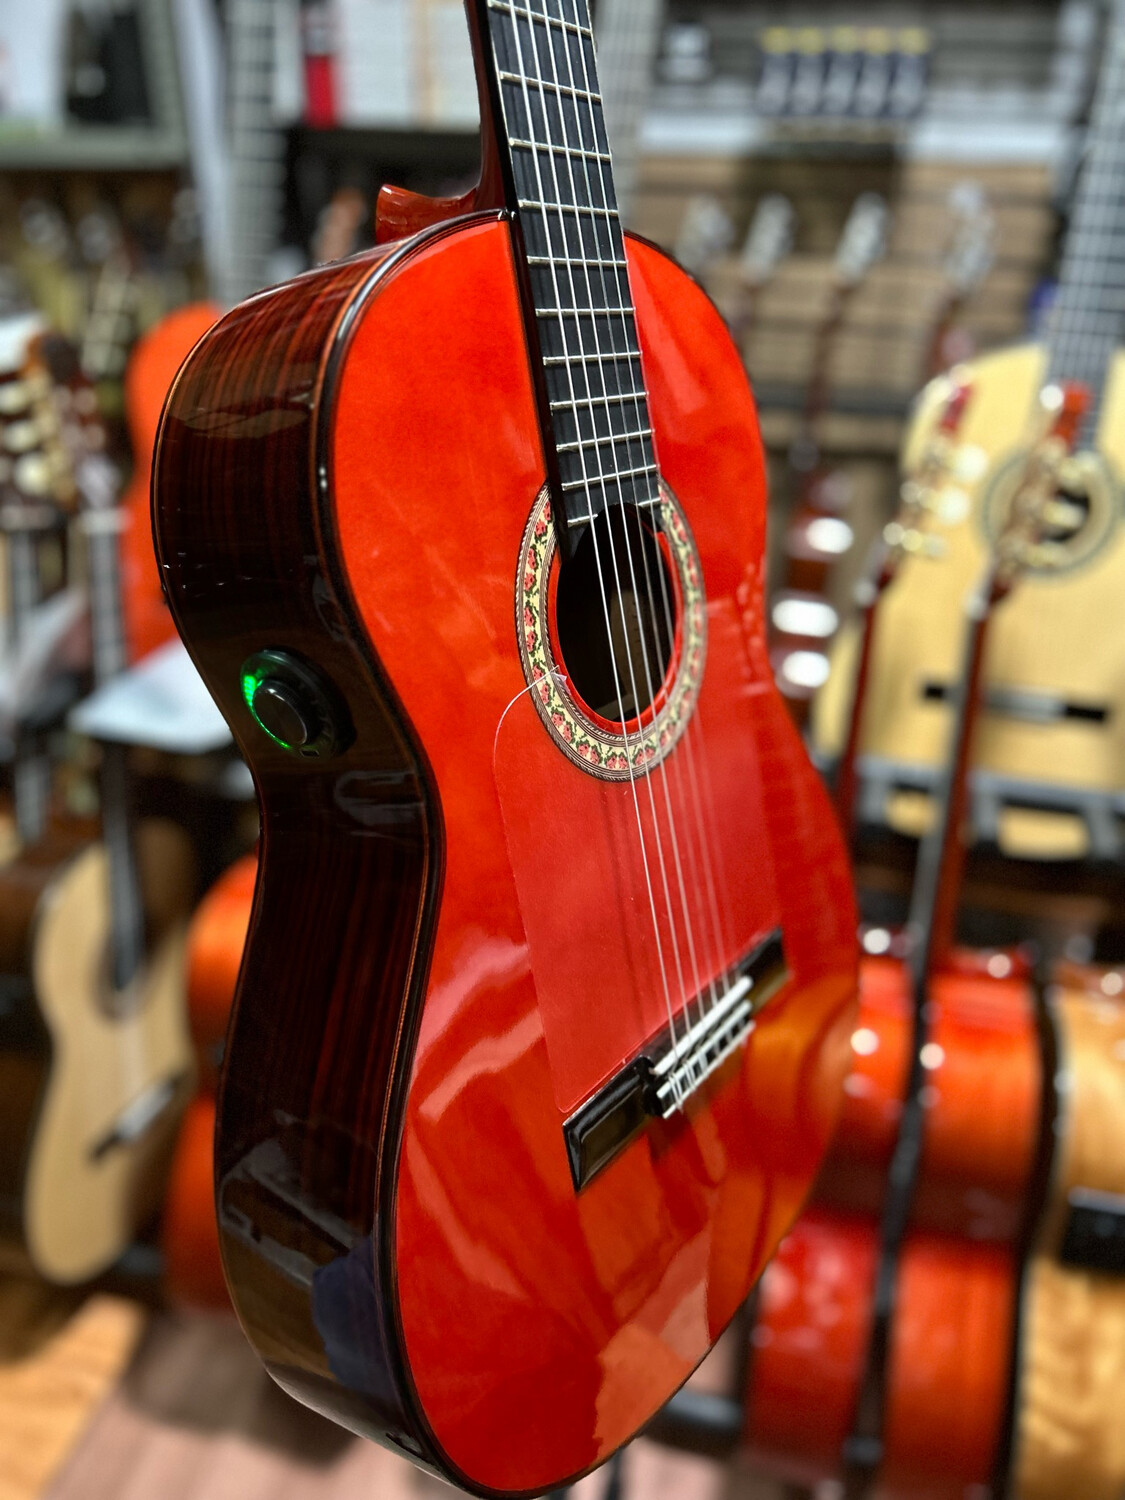 Guitarras Artesanas Antonio de Toledo F17 PALOSANTO OS1 roja con estuche